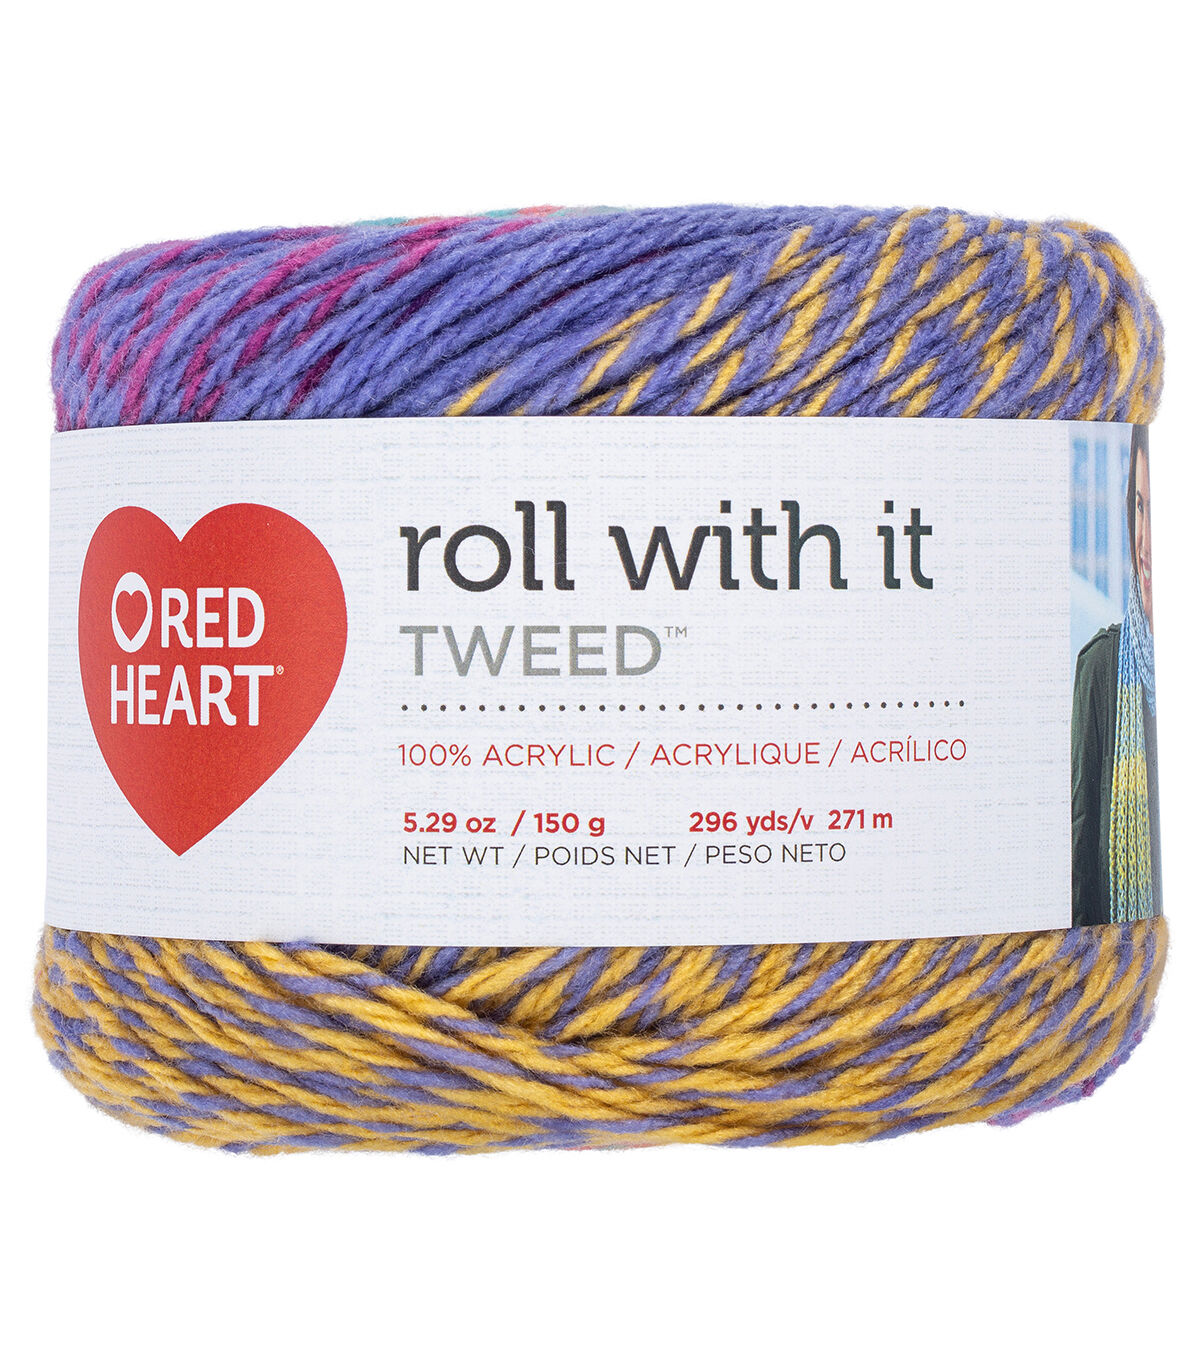 roll with it tweed yarn